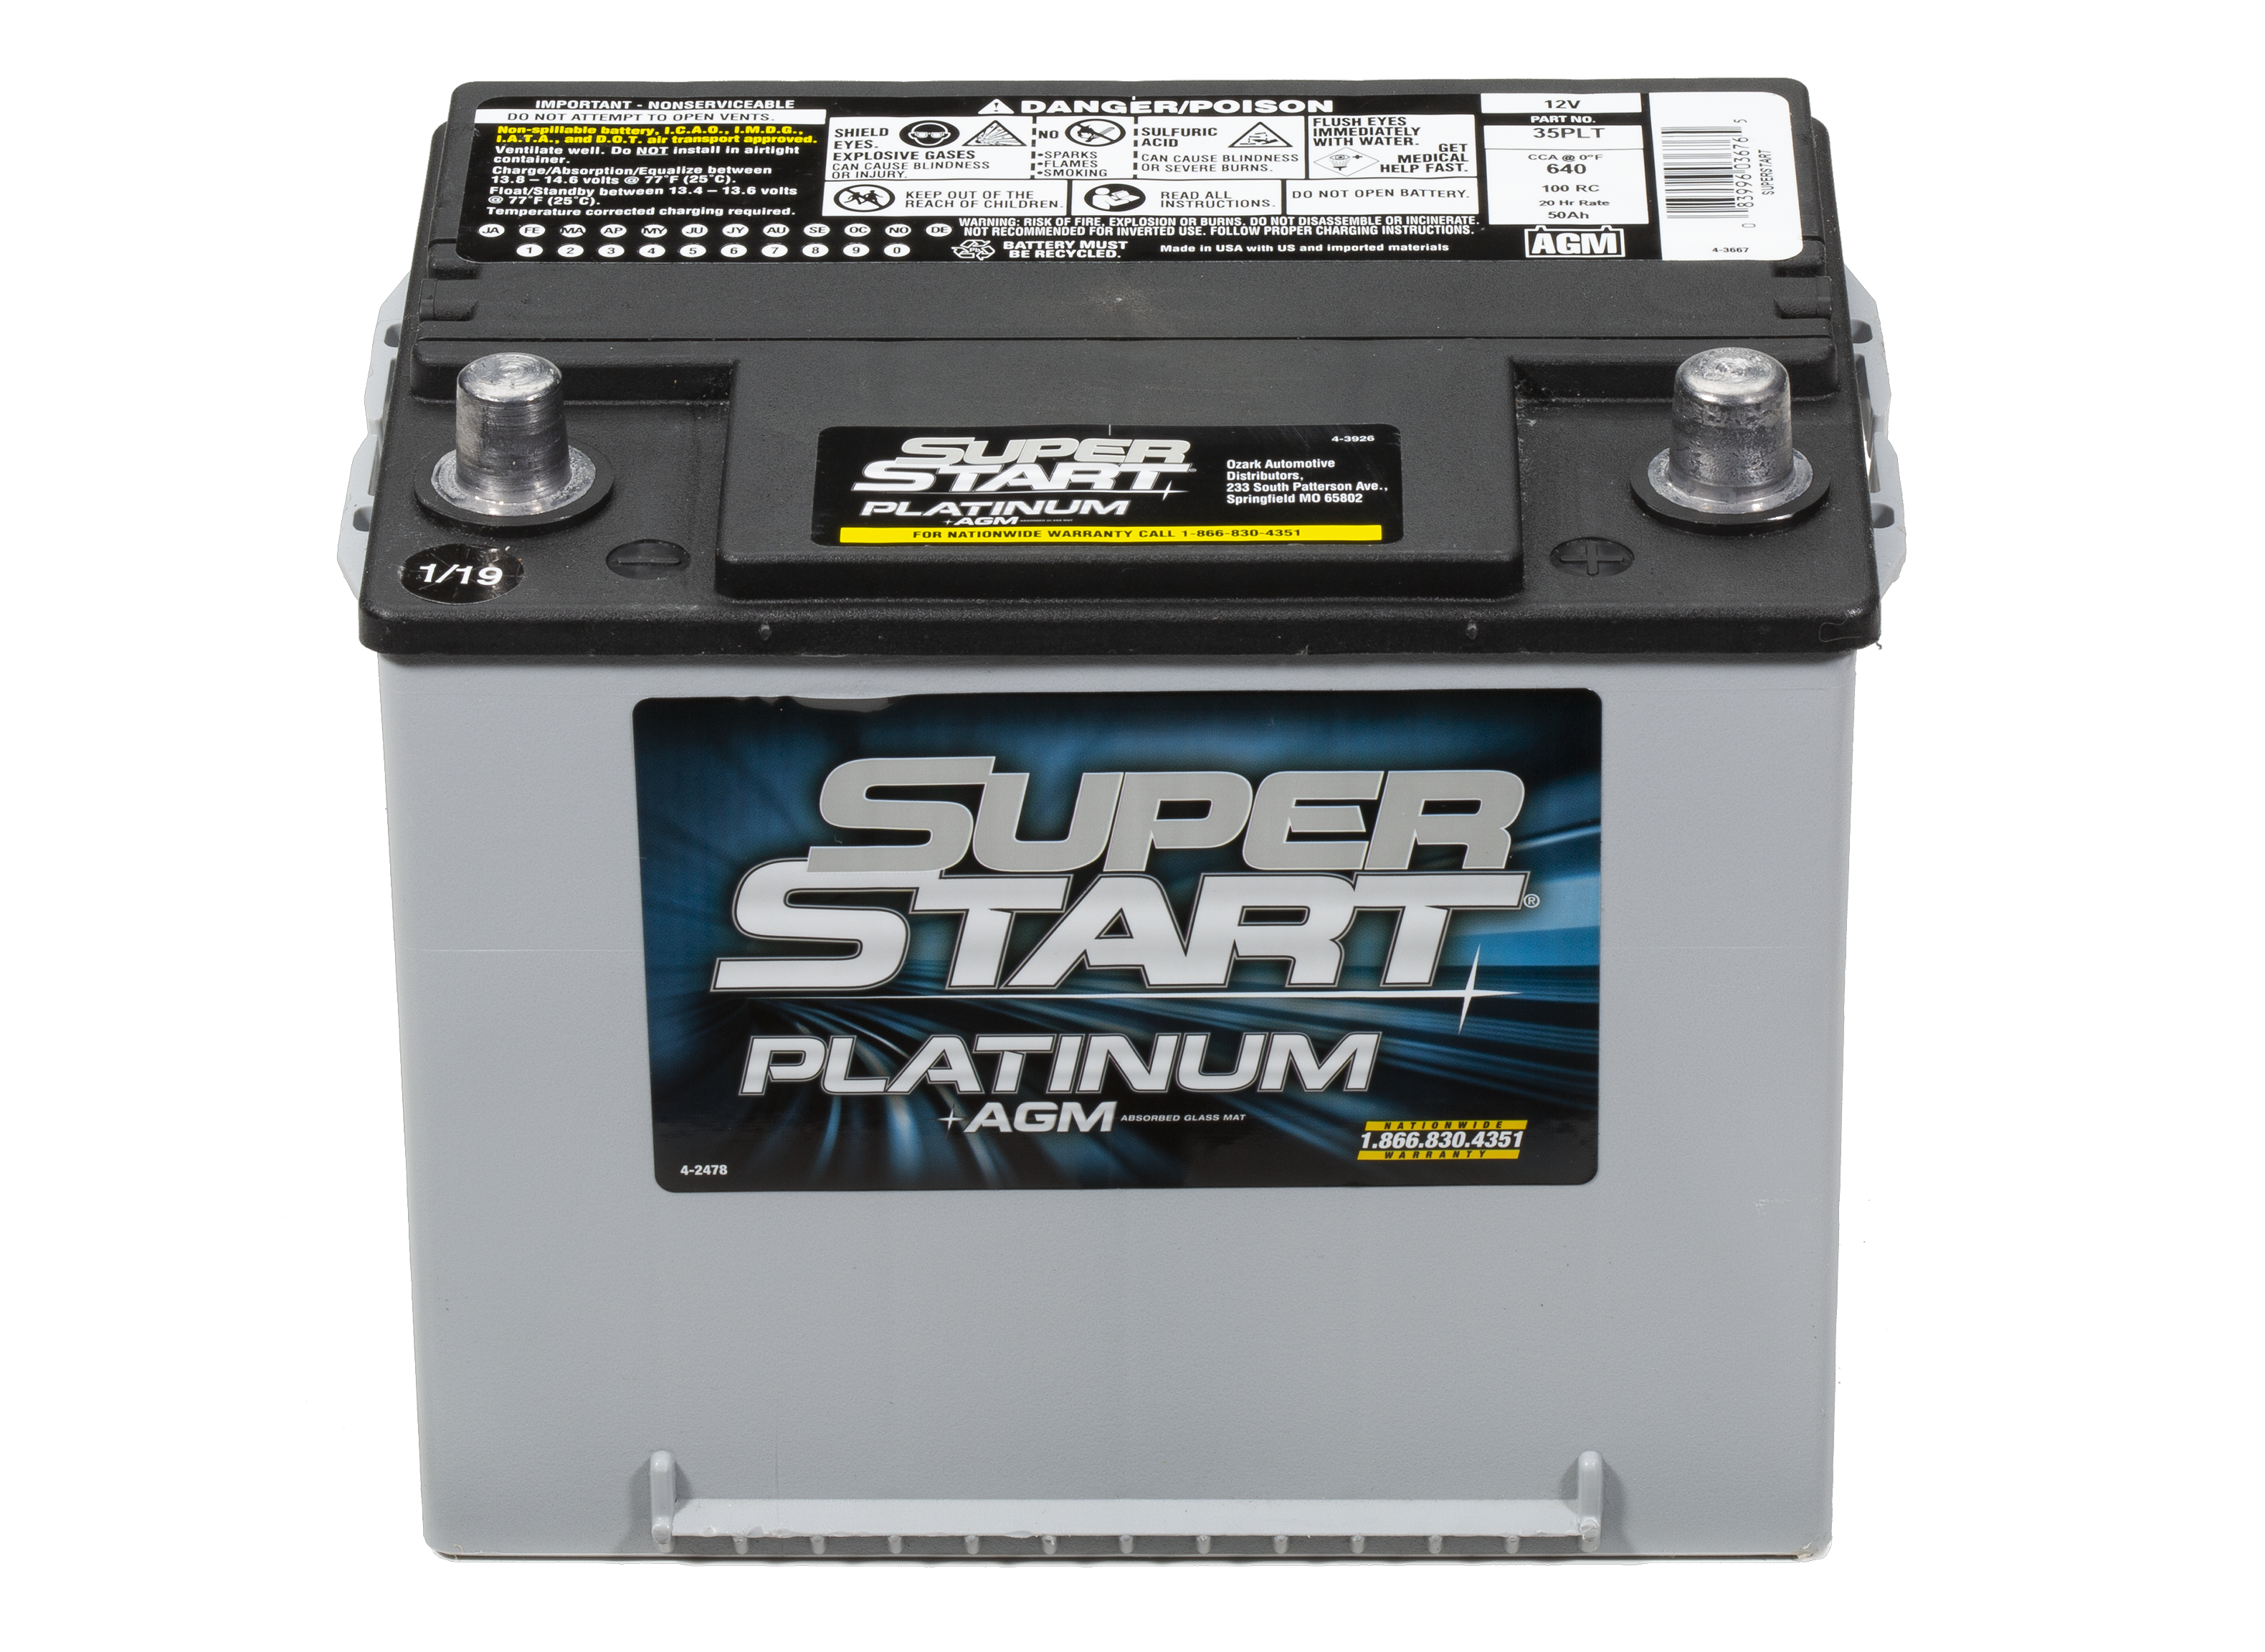 Are Super Start Batteries Good